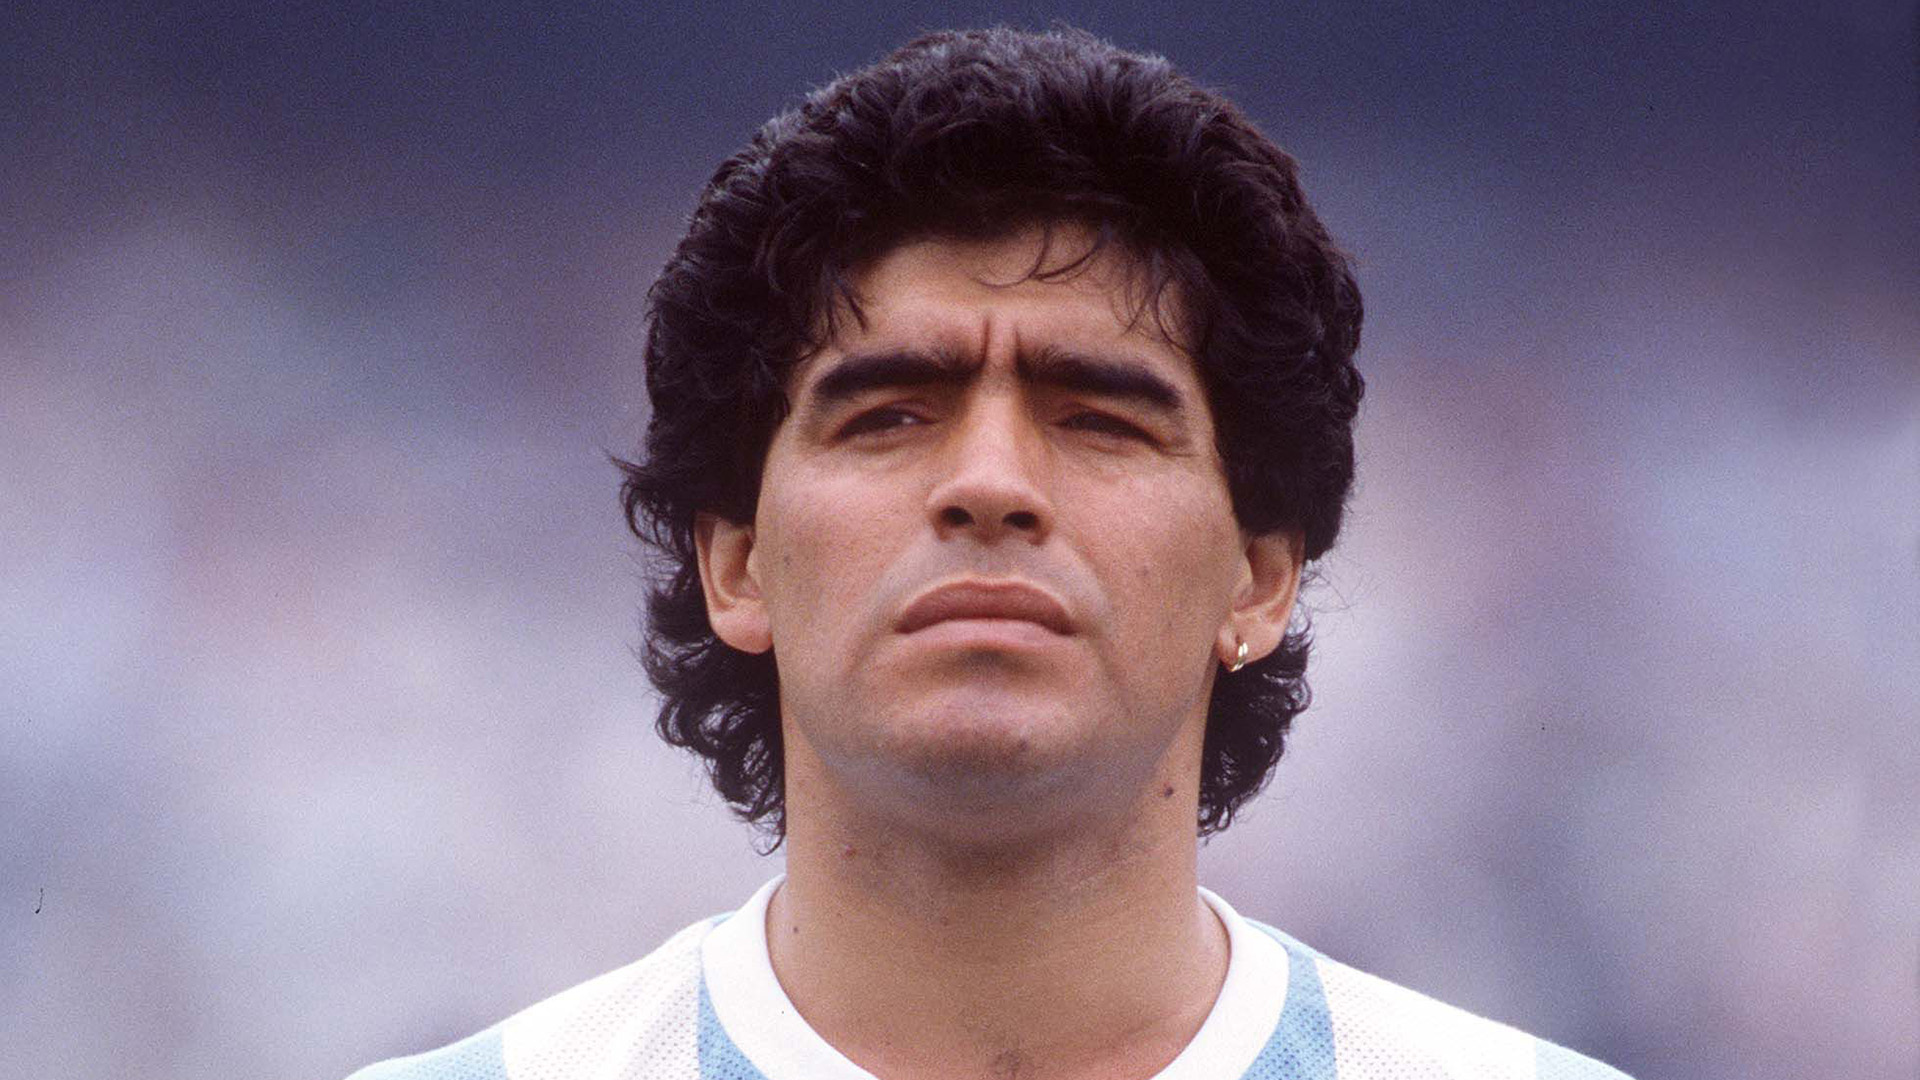 Newsletter del día: La culpa de haber “matado” a Maradona